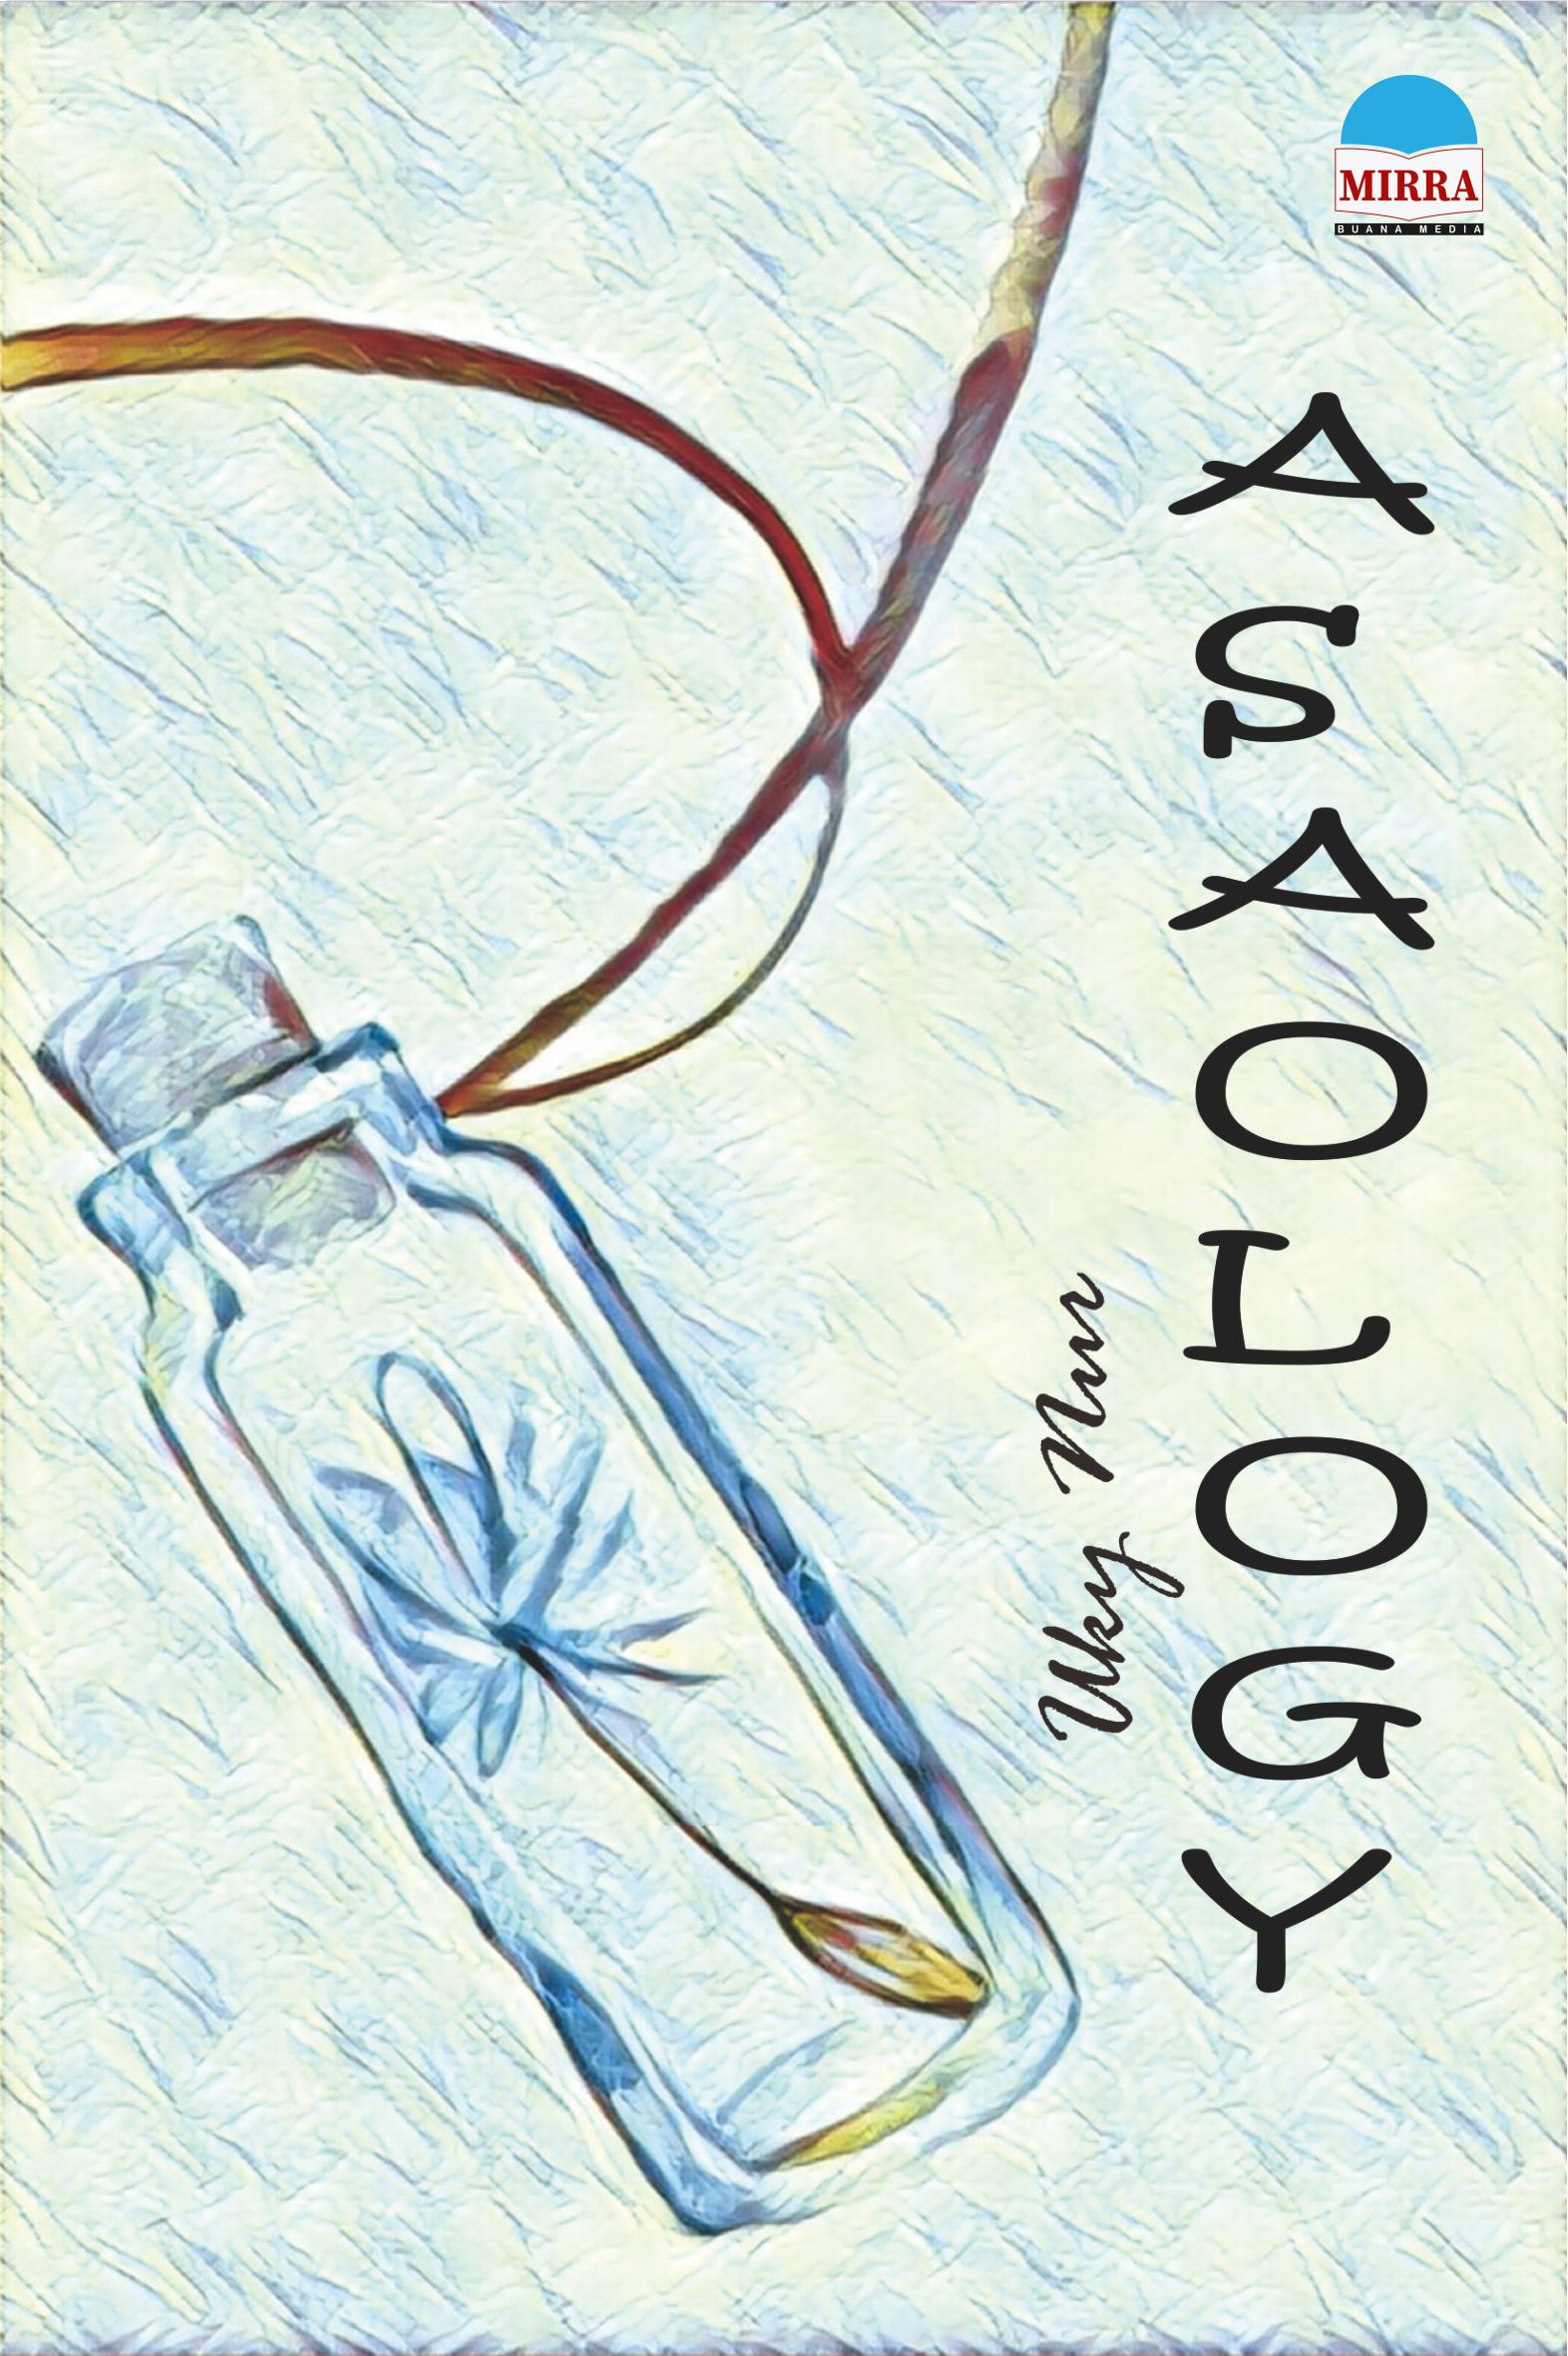 cover/(07-10-2022)asaology.jpg